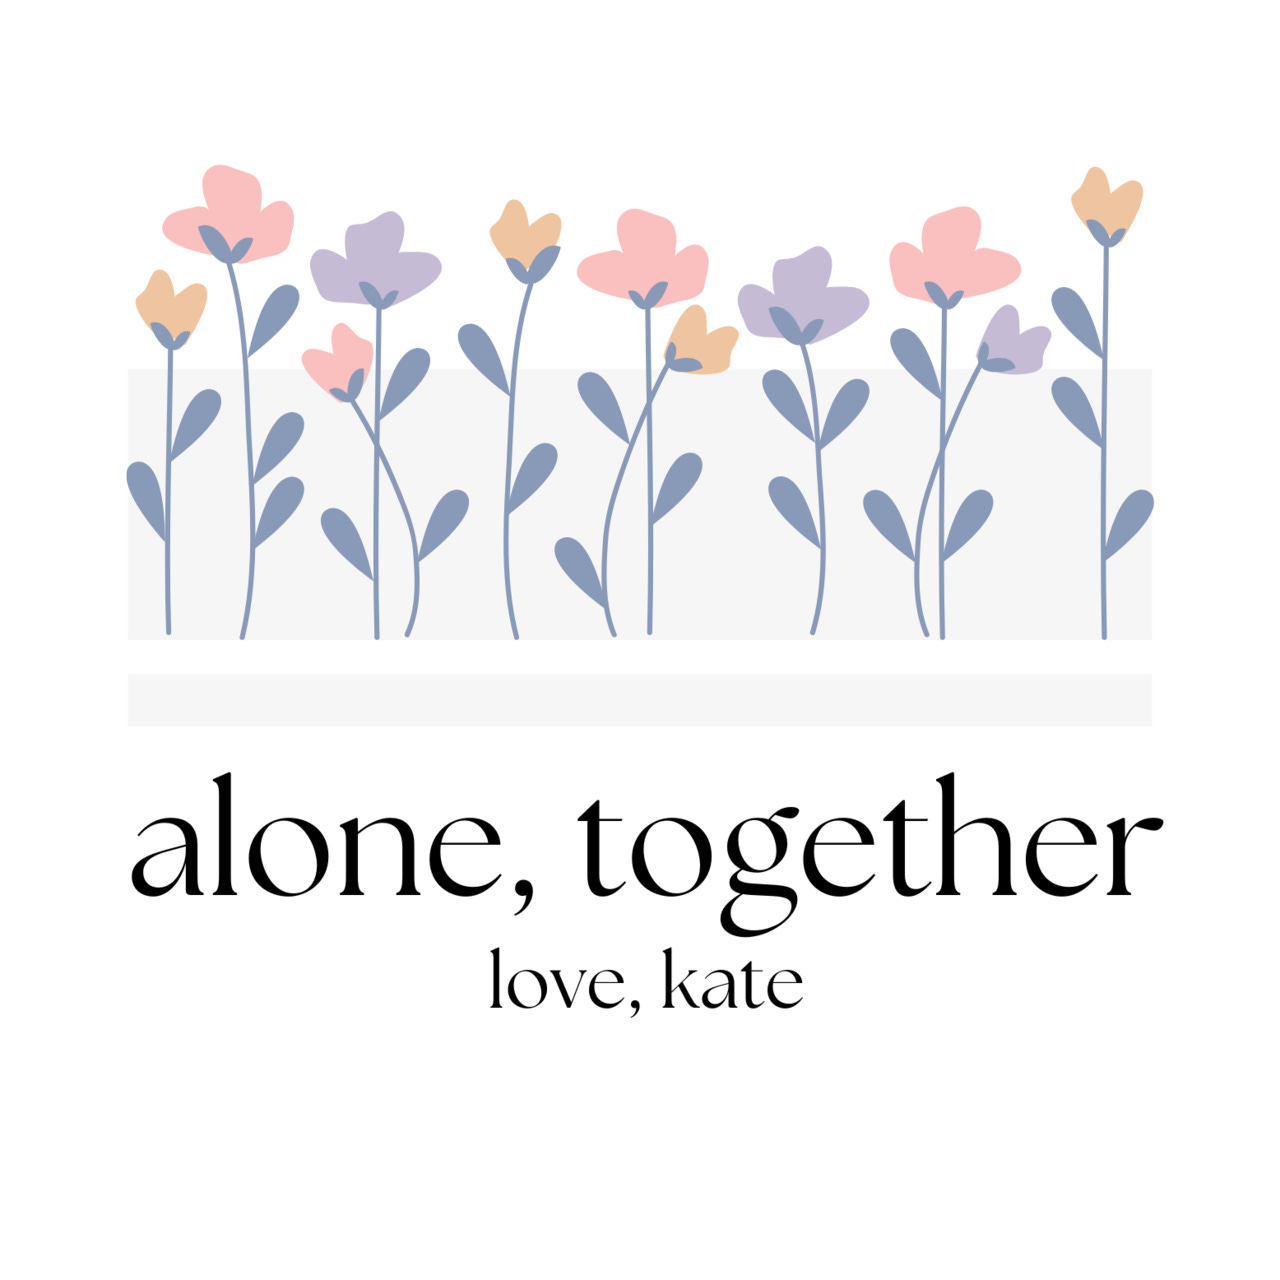 alone, together